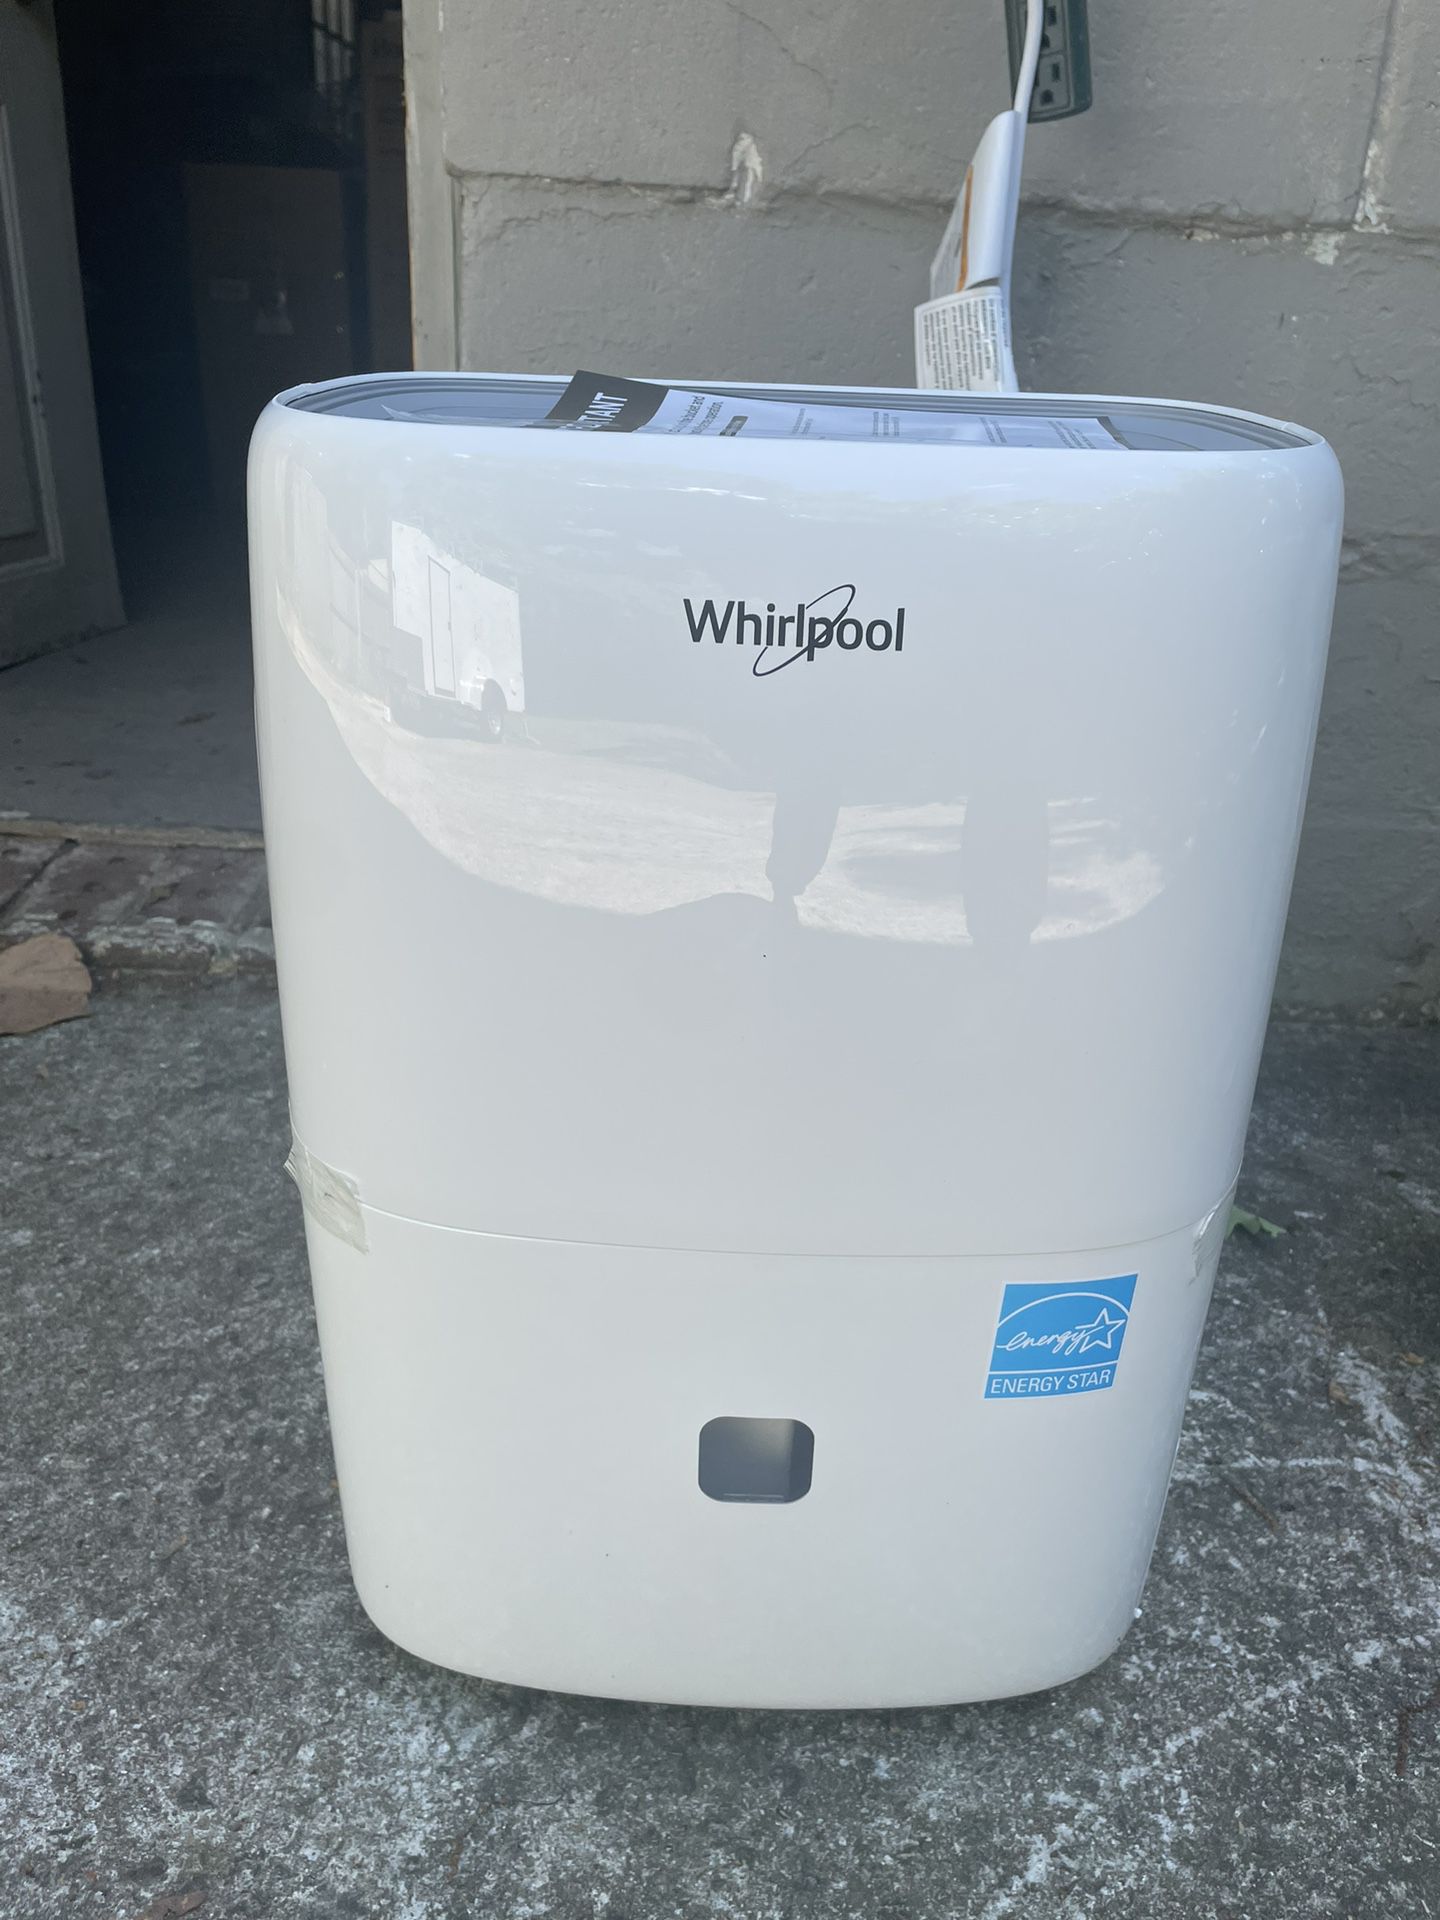 Whirlpool Dehumidifier Model WHAD201CW